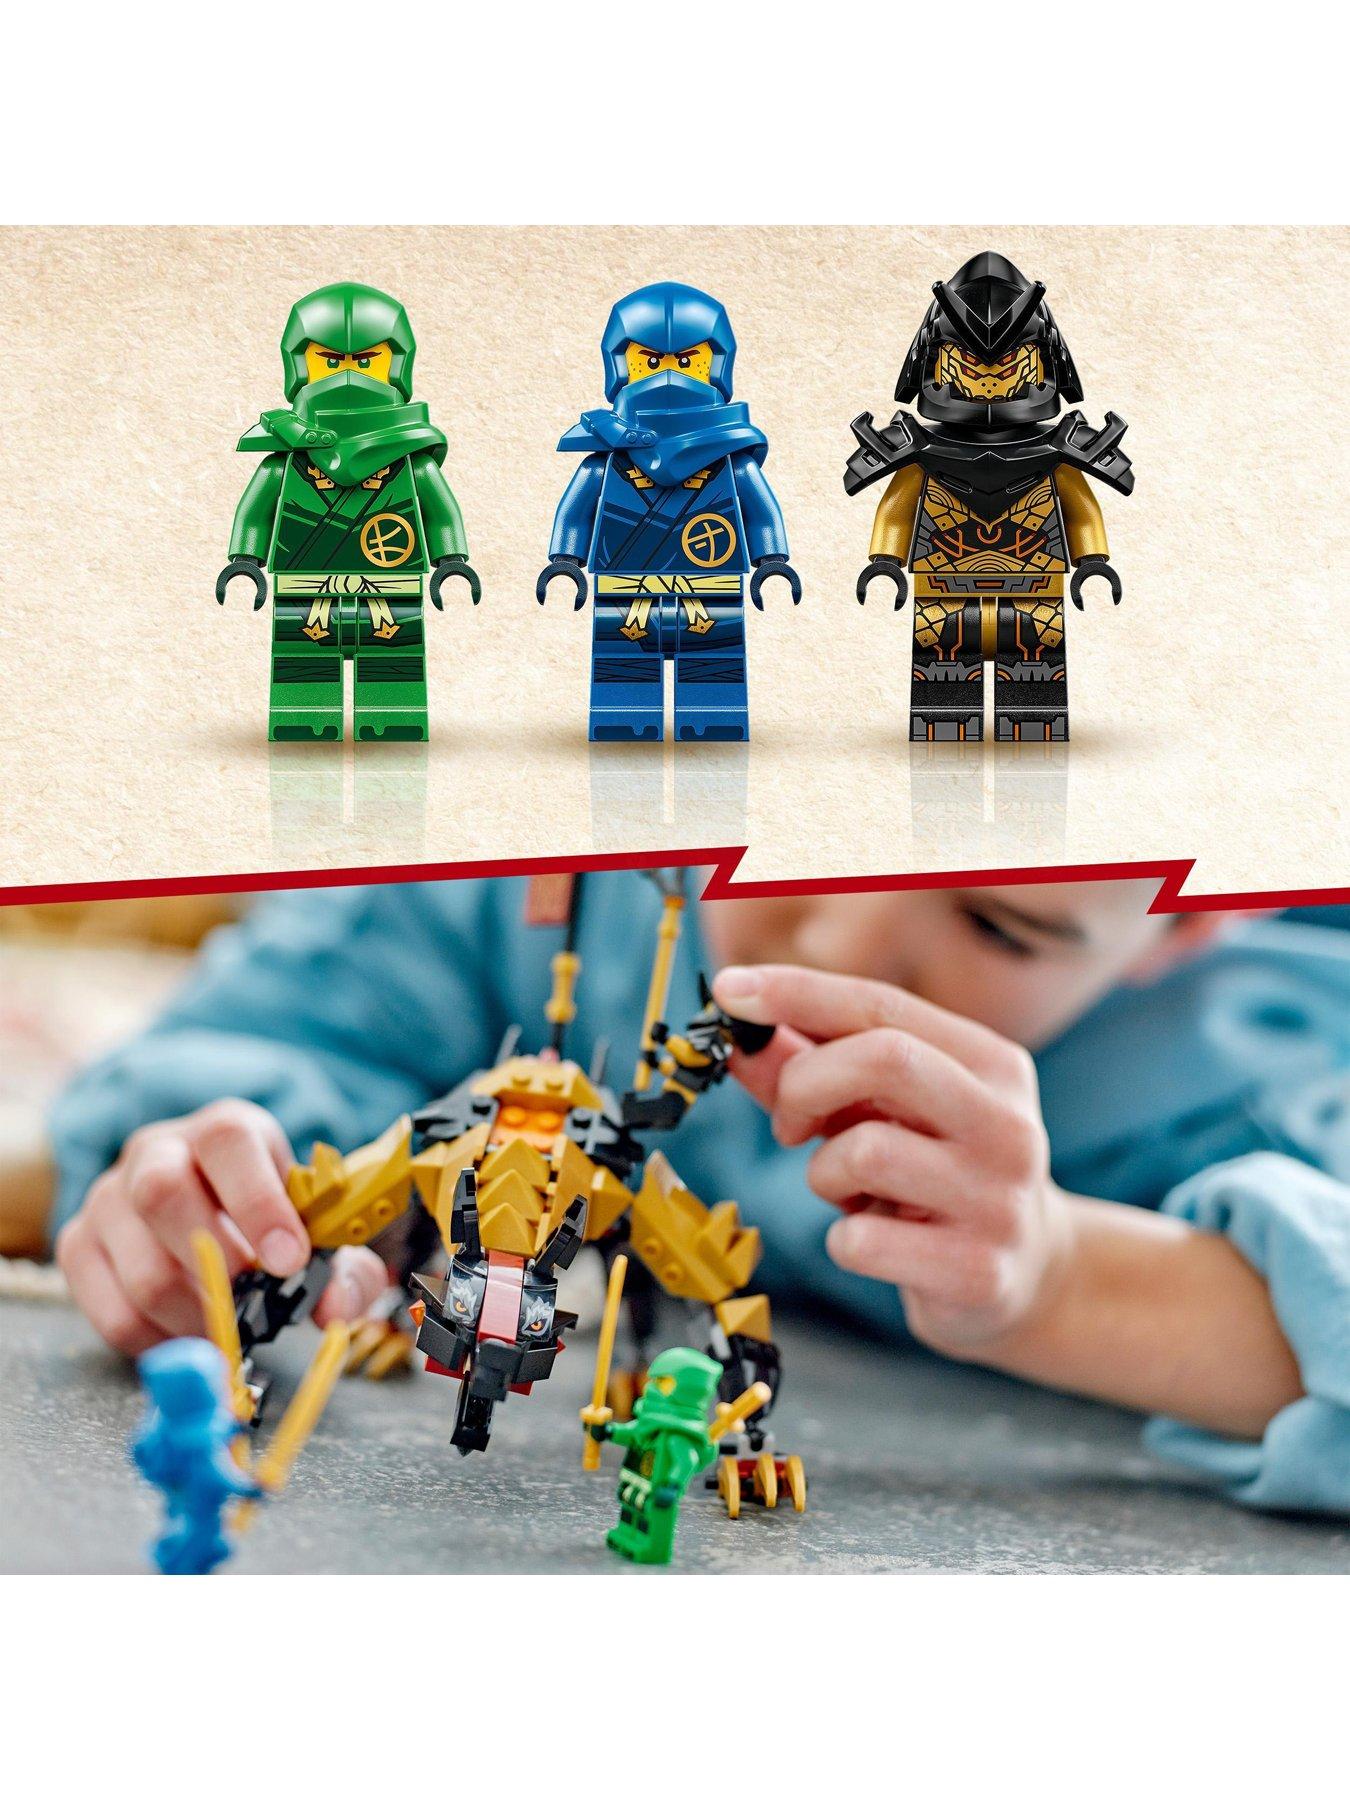 LEGO Ninjago Dragon's Rising Collectable Construction Playset with Figures